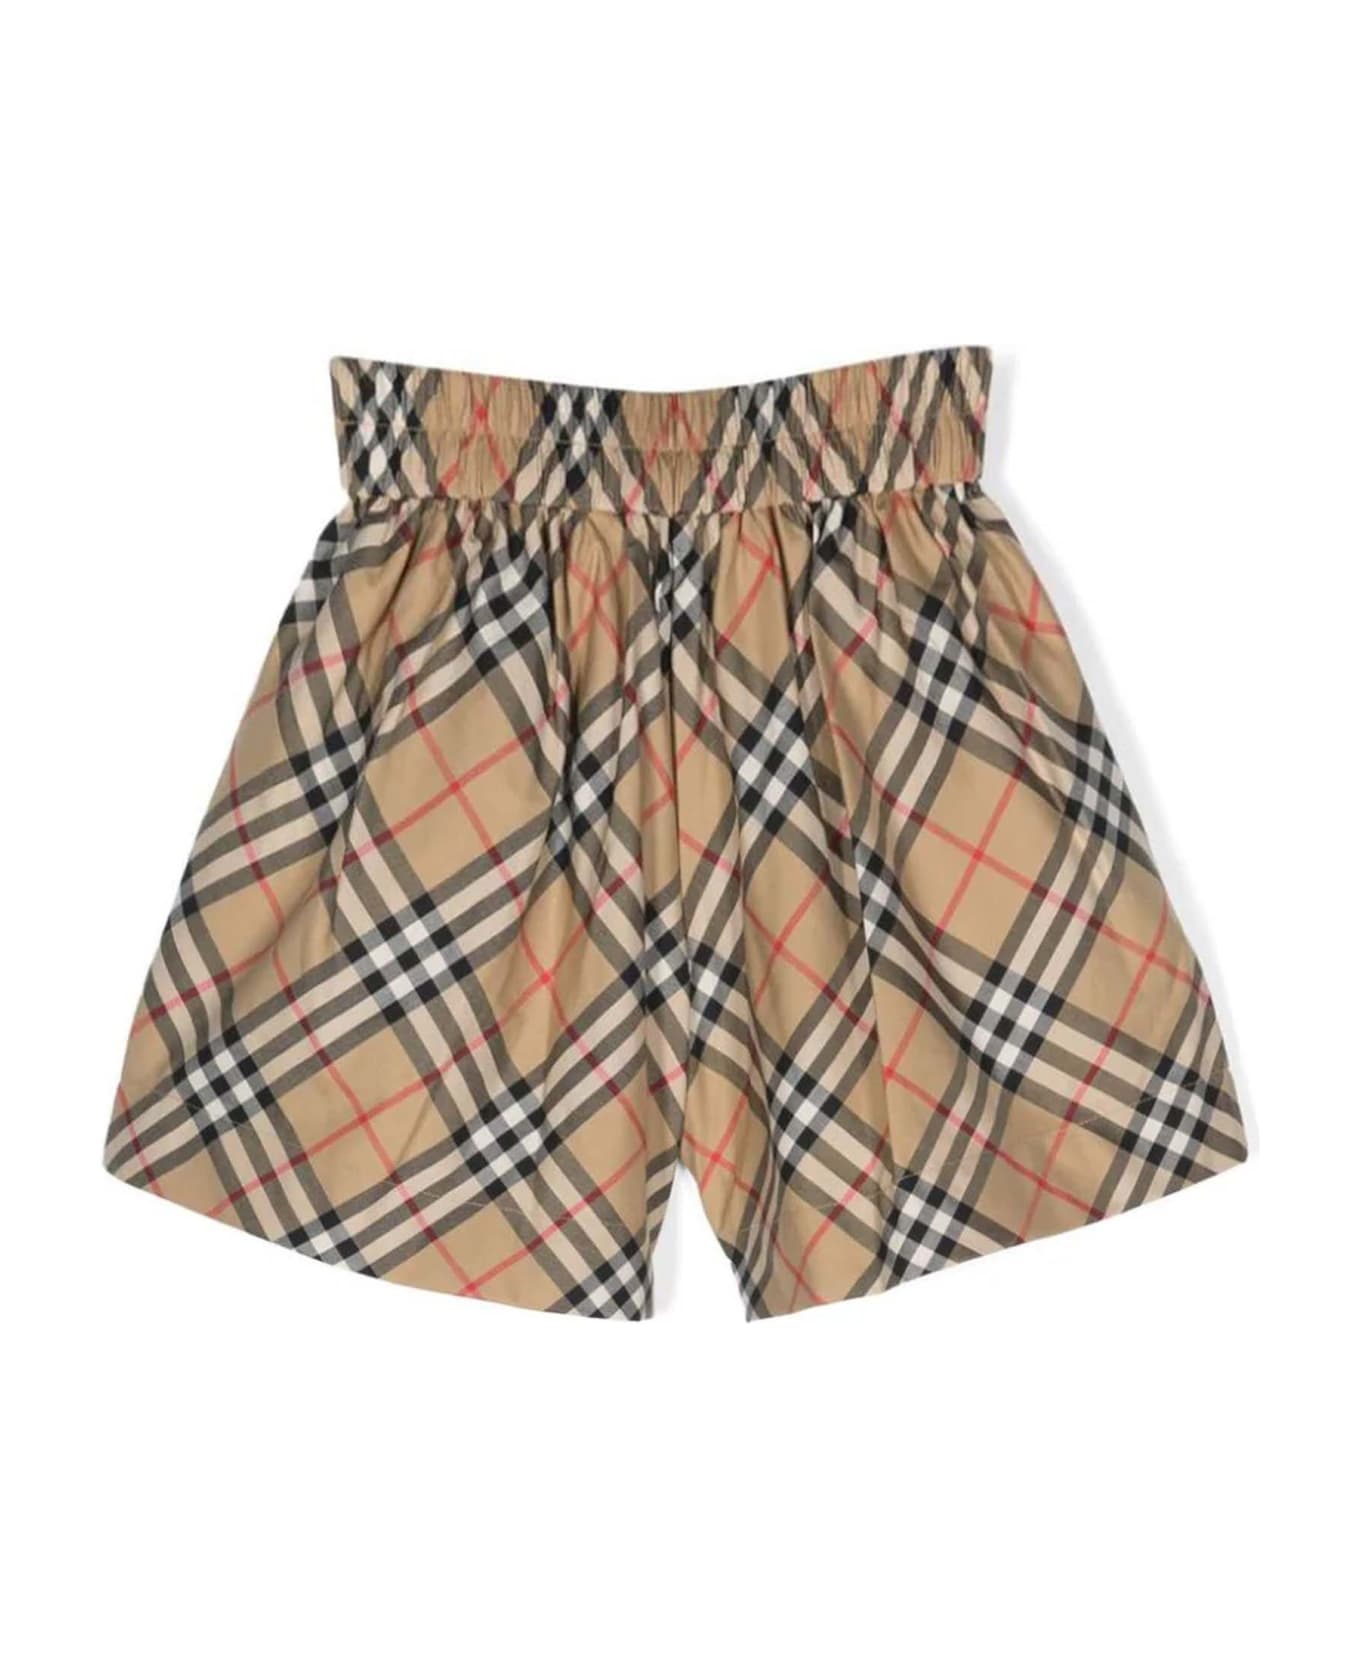 Burberry Vintage Check-pattern Cotton Shorts - Archive beige ip chk